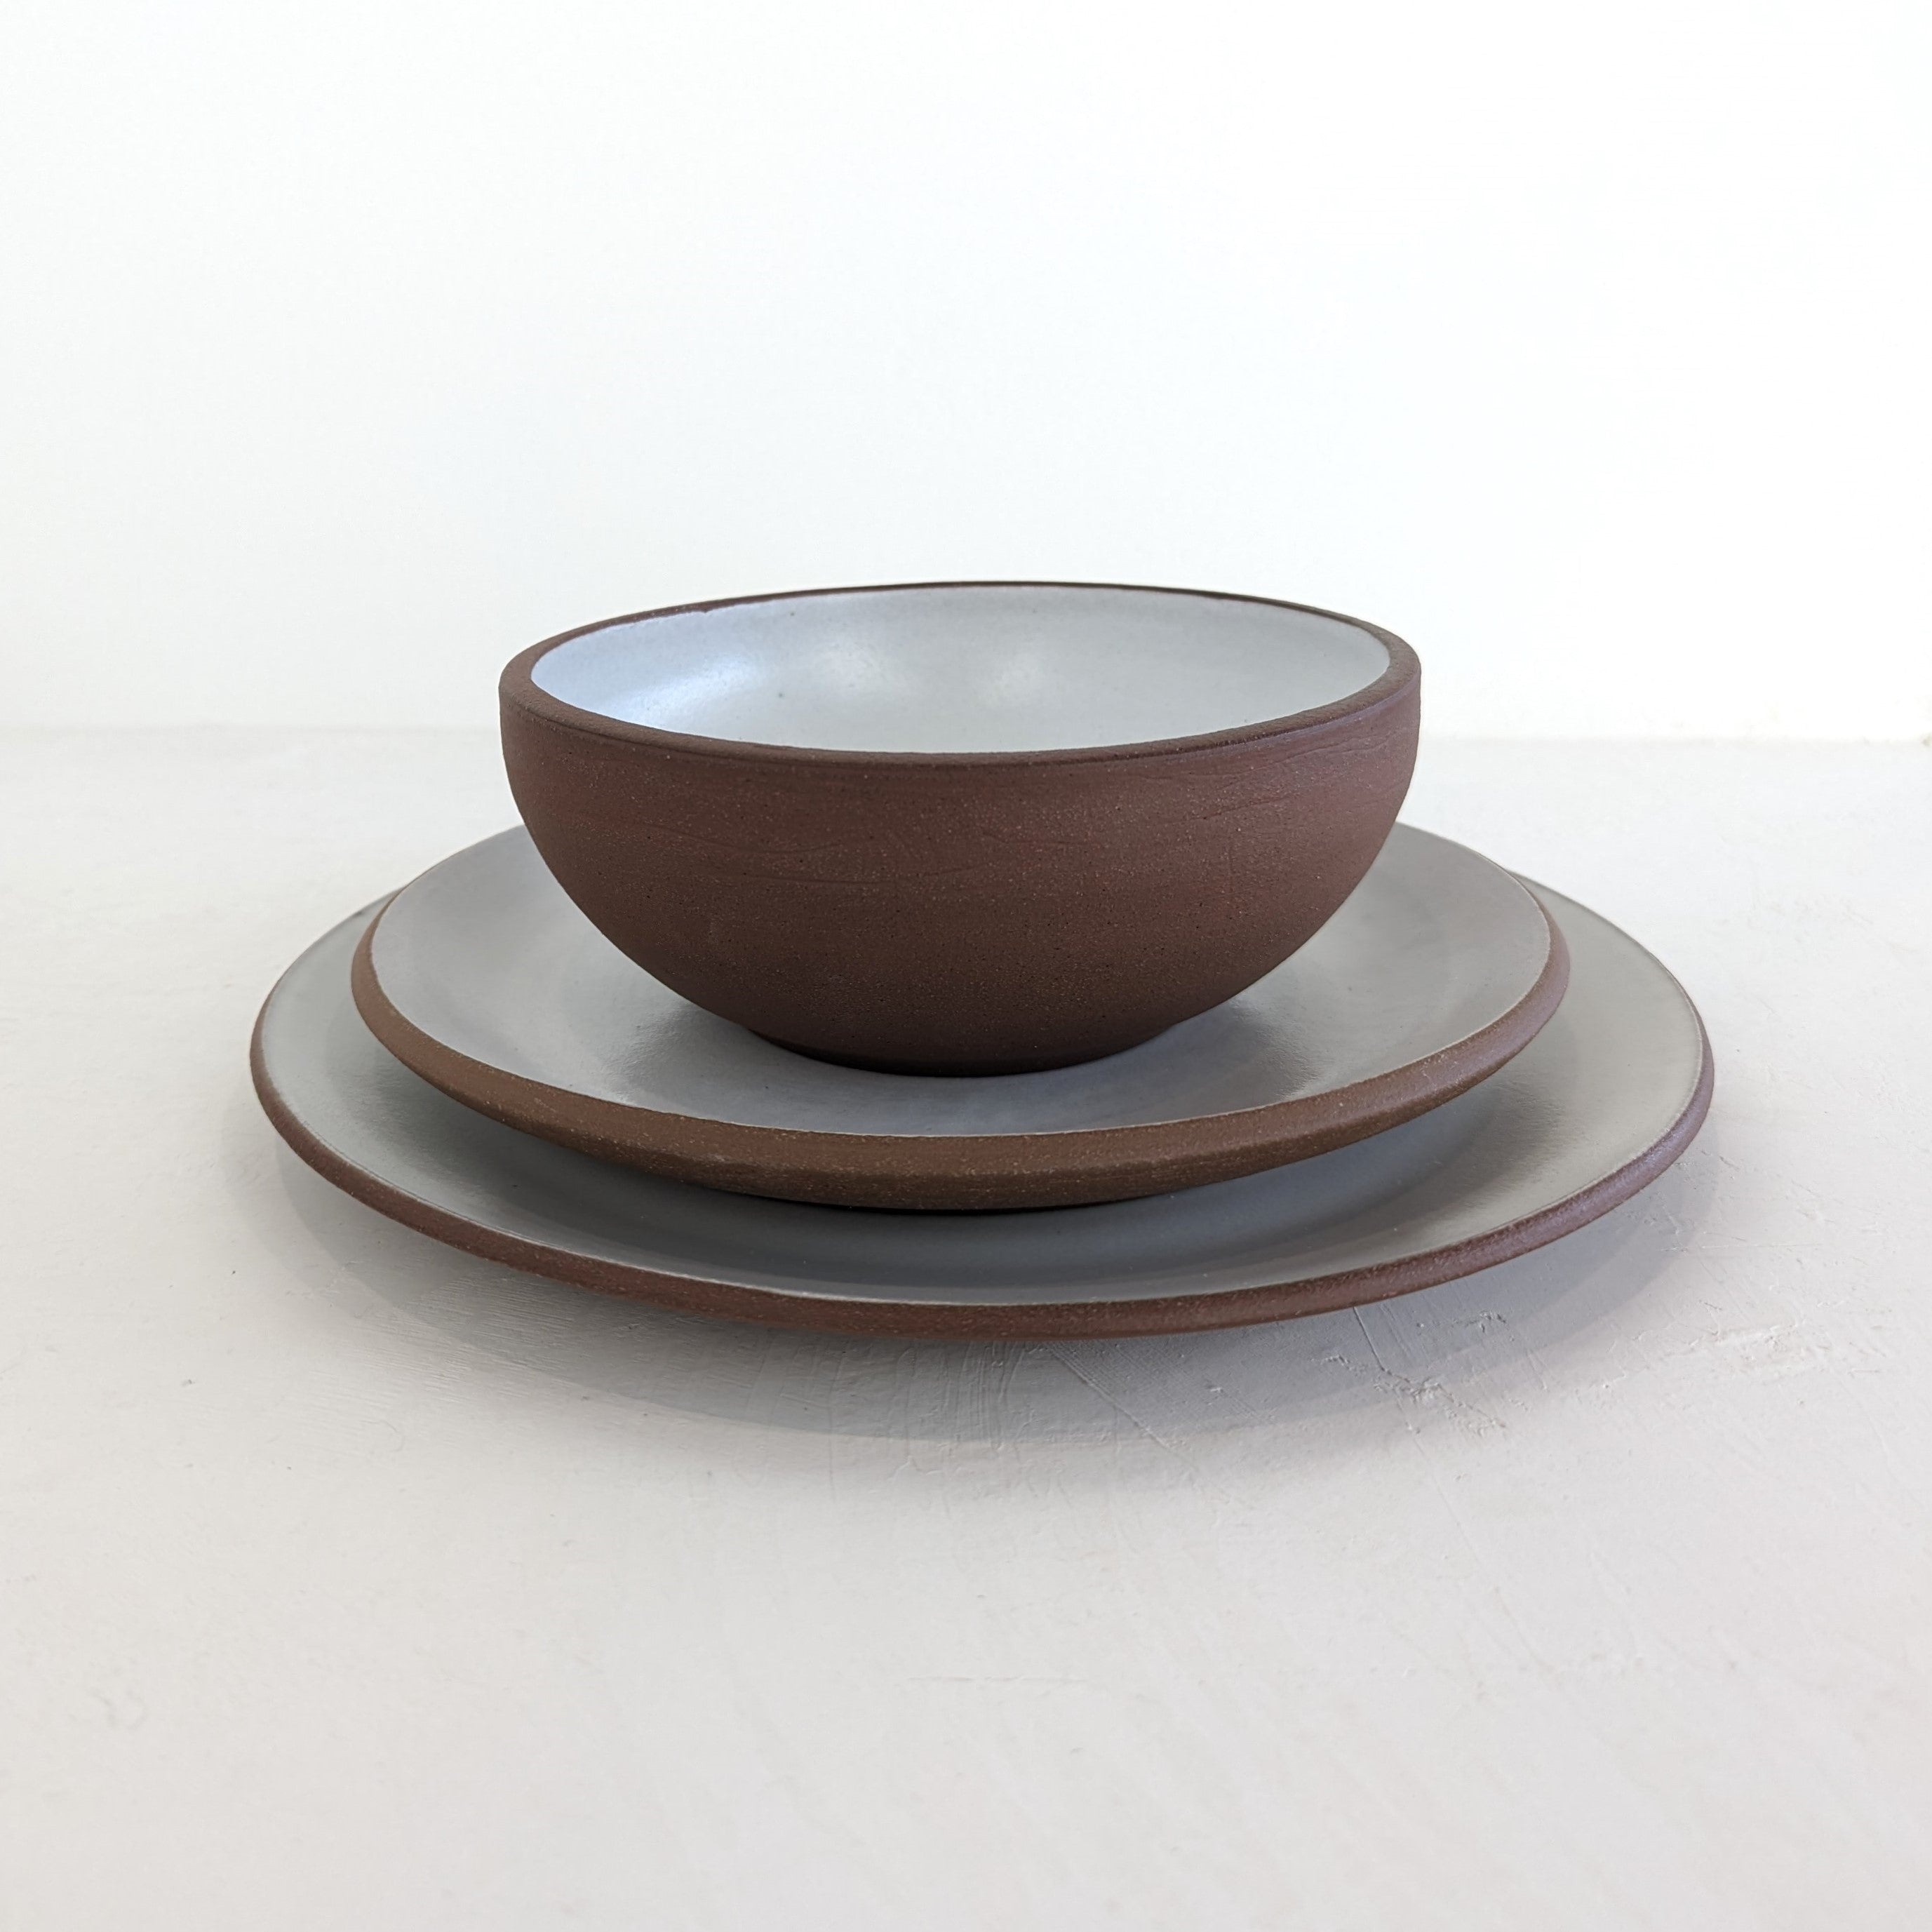 Handmade ceramic plate setting made by Black Oak Art, who specializes in handmade ceramics